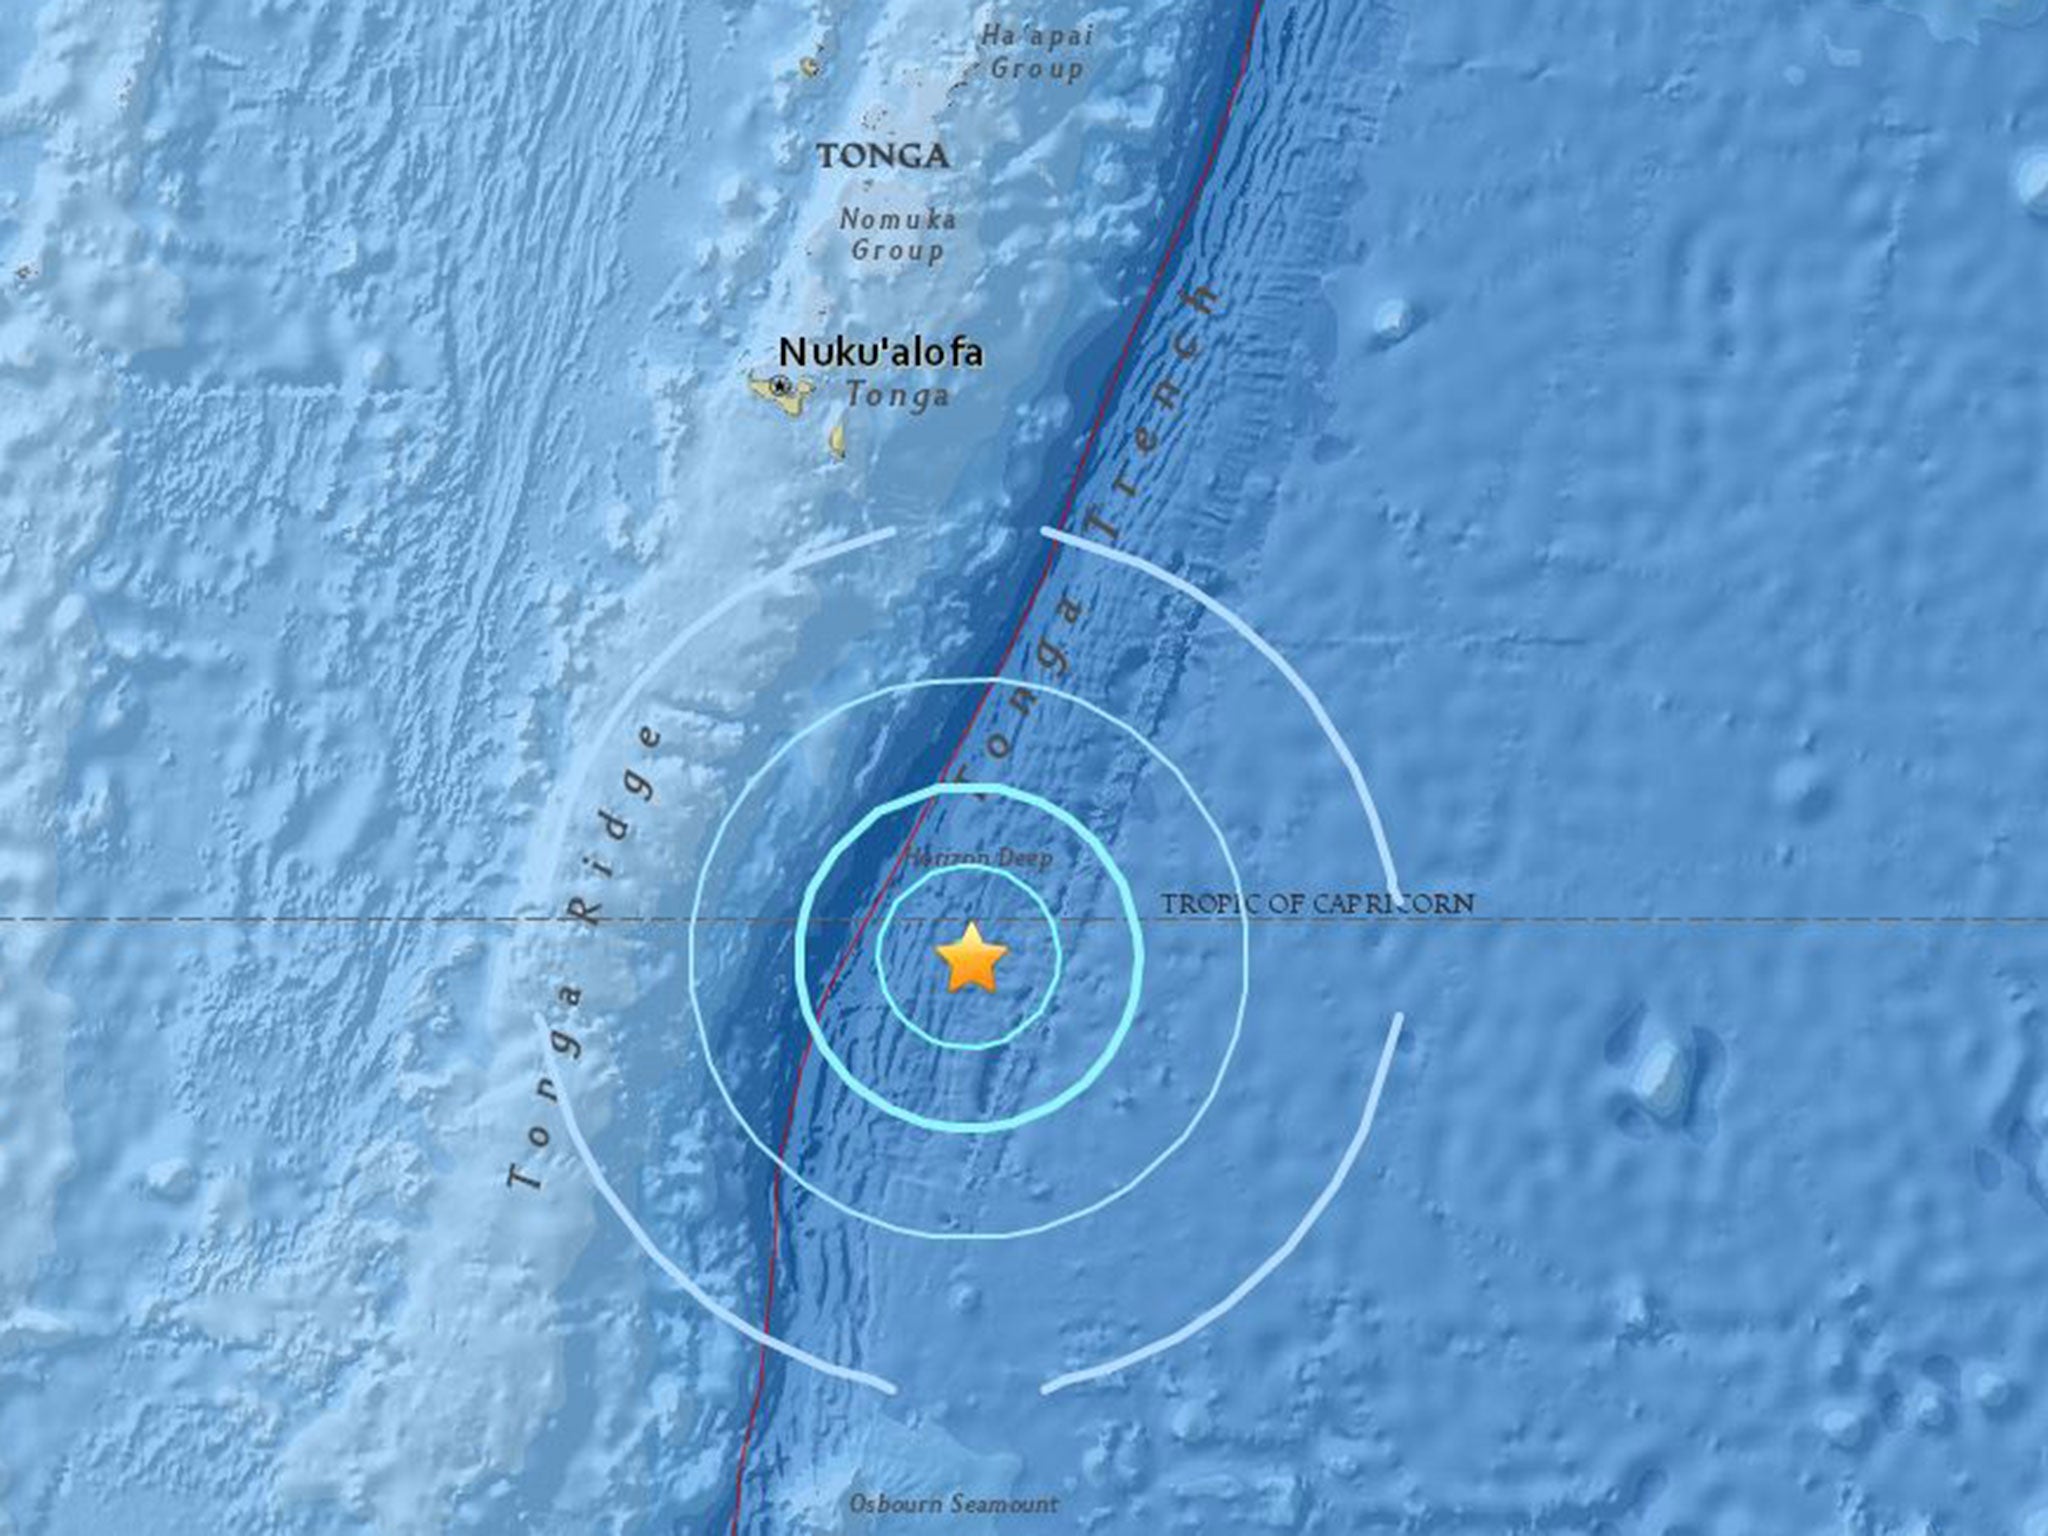 The quake hit 171.12 miles southeast of the capital Nuku'alofa at a depth of 66km